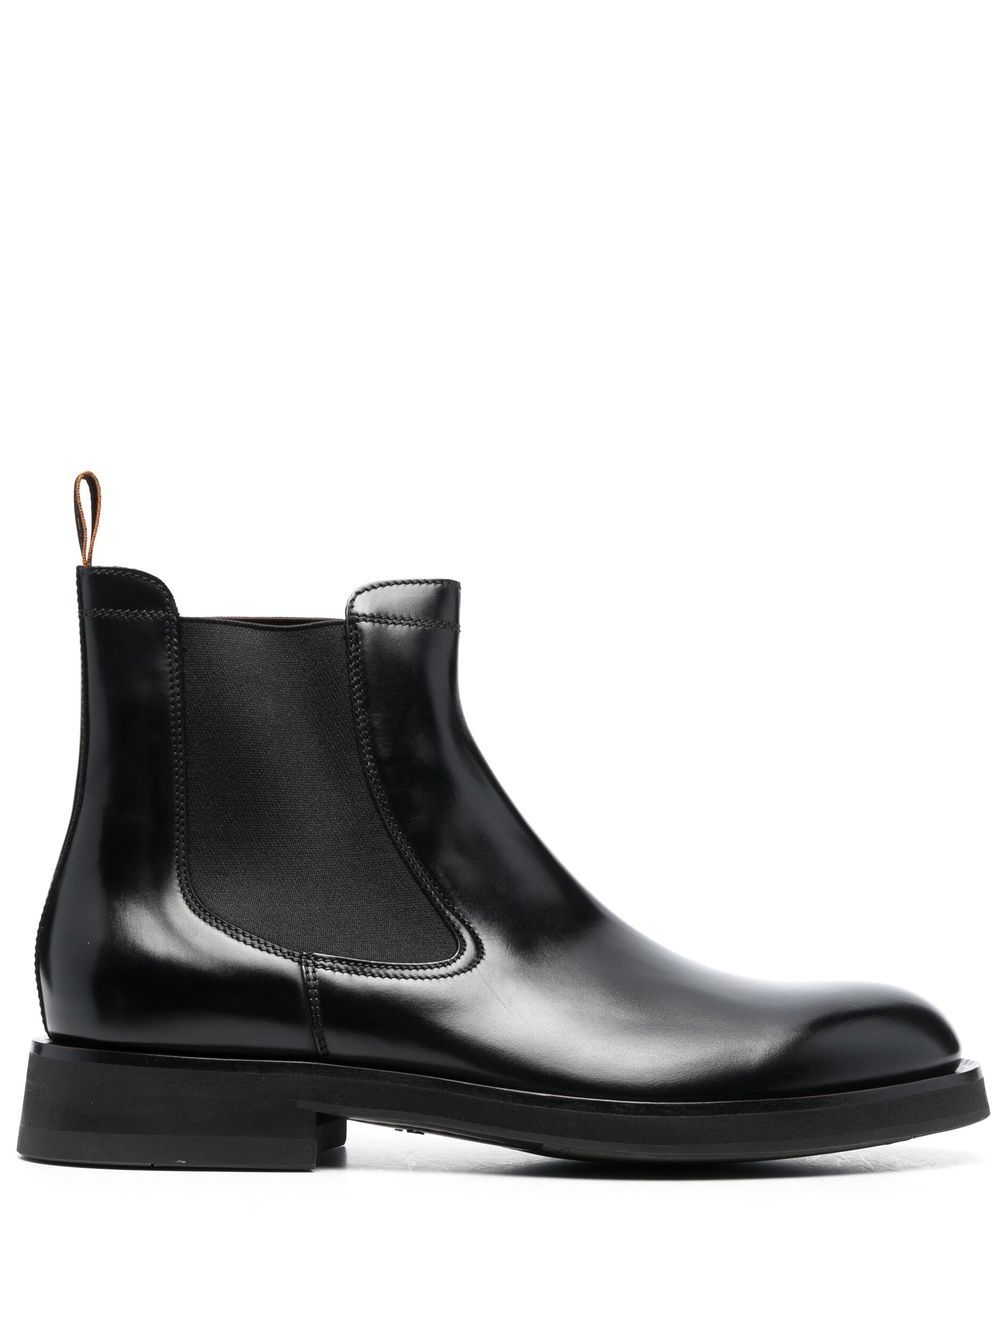 Santoni leather Chelsea boots - Black von Santoni